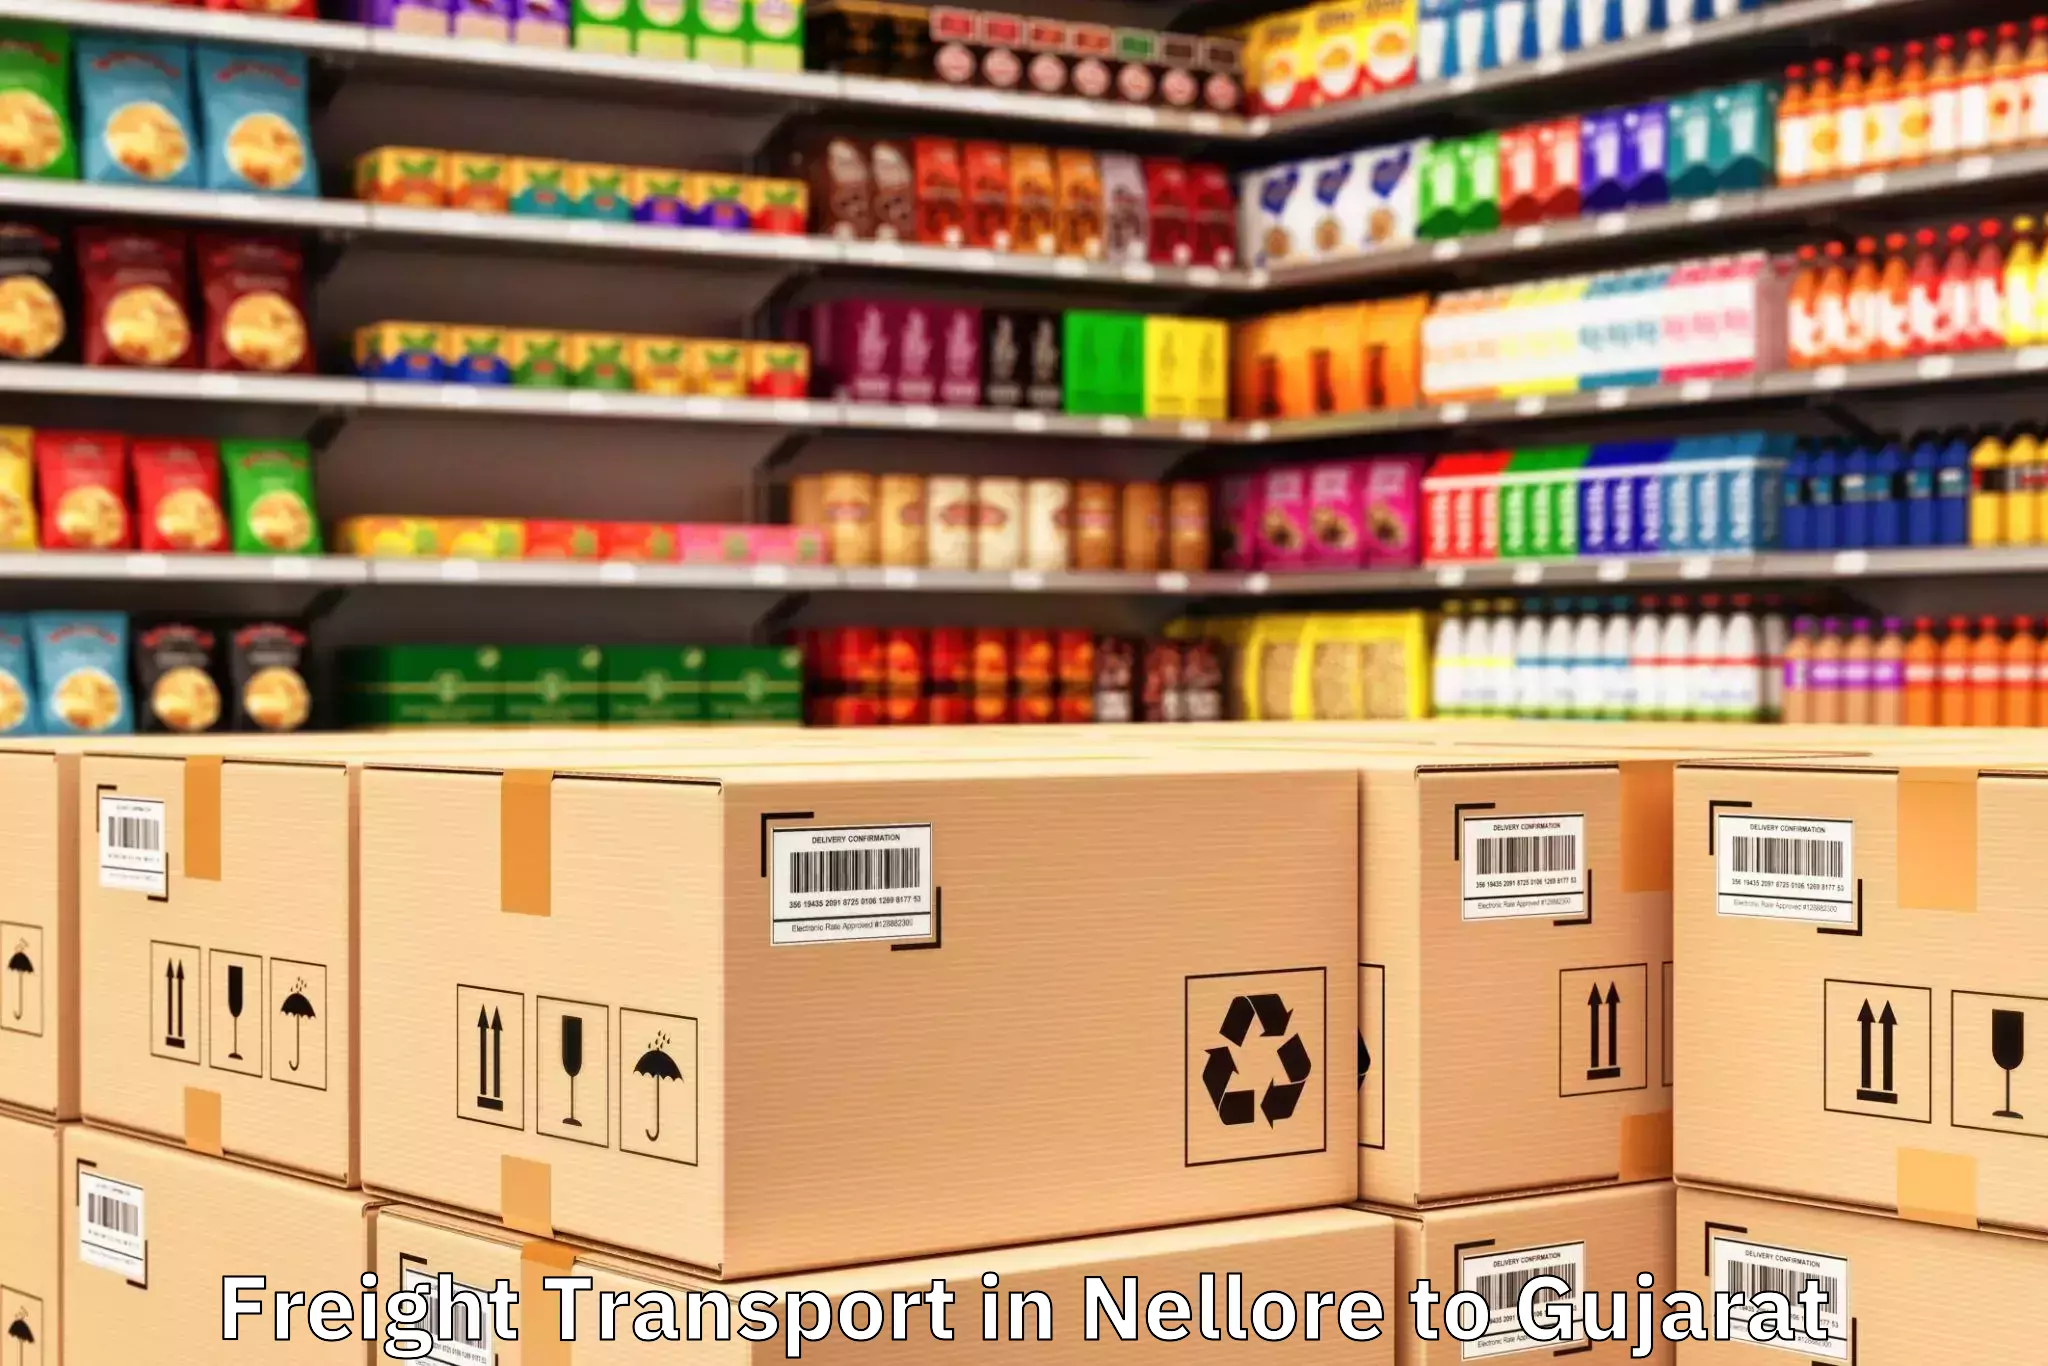 Get Nellore to Naroda Freight Transport